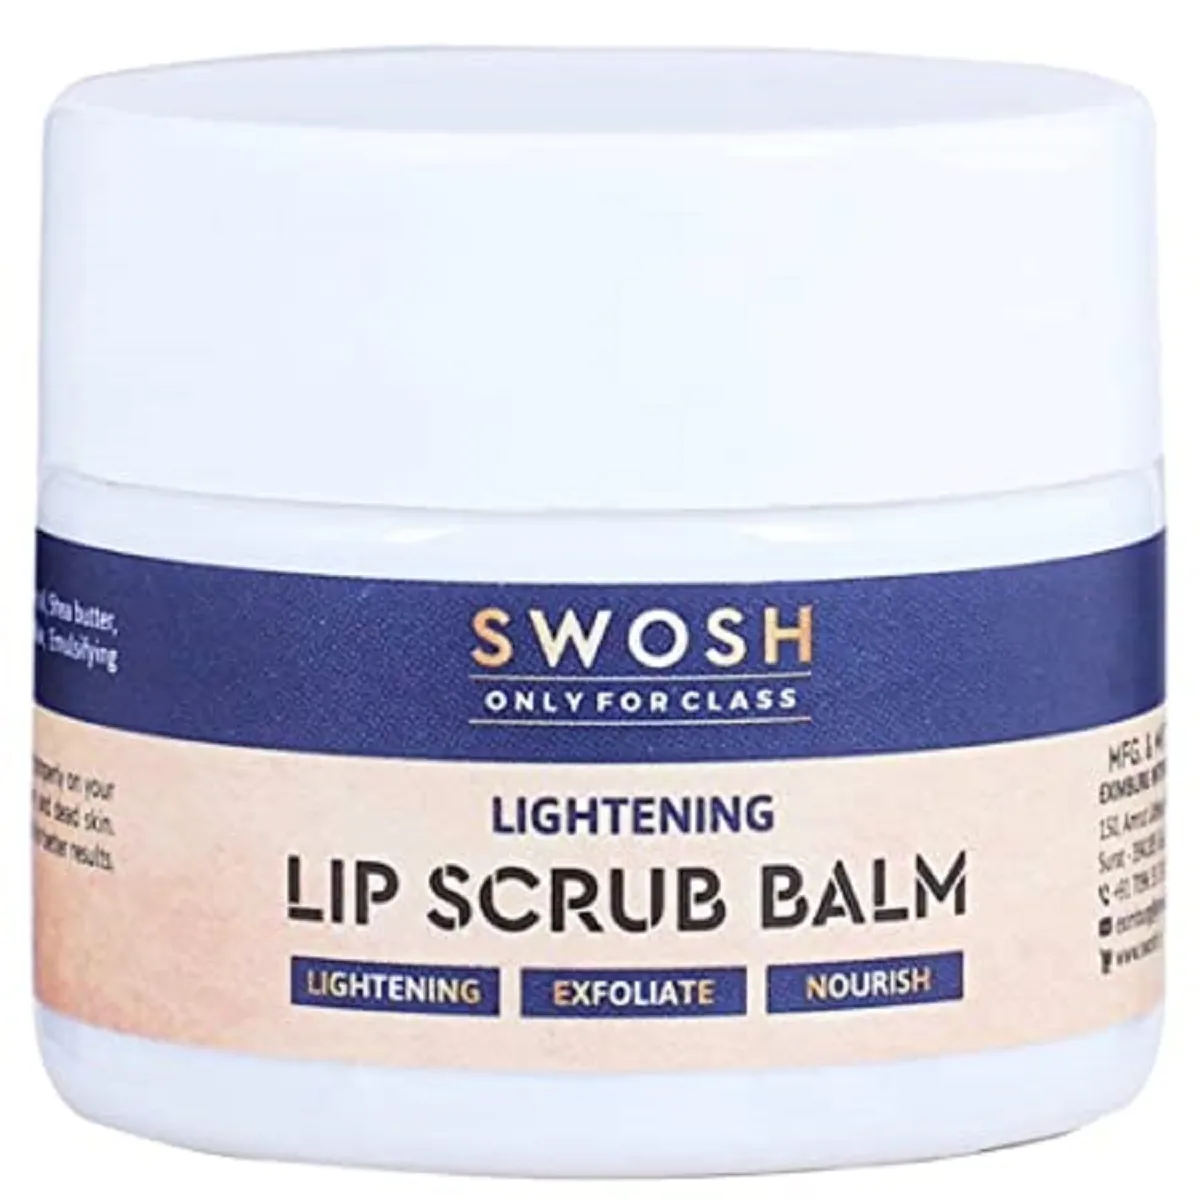 Swosh Lightening Lip Scrub Balm 20g